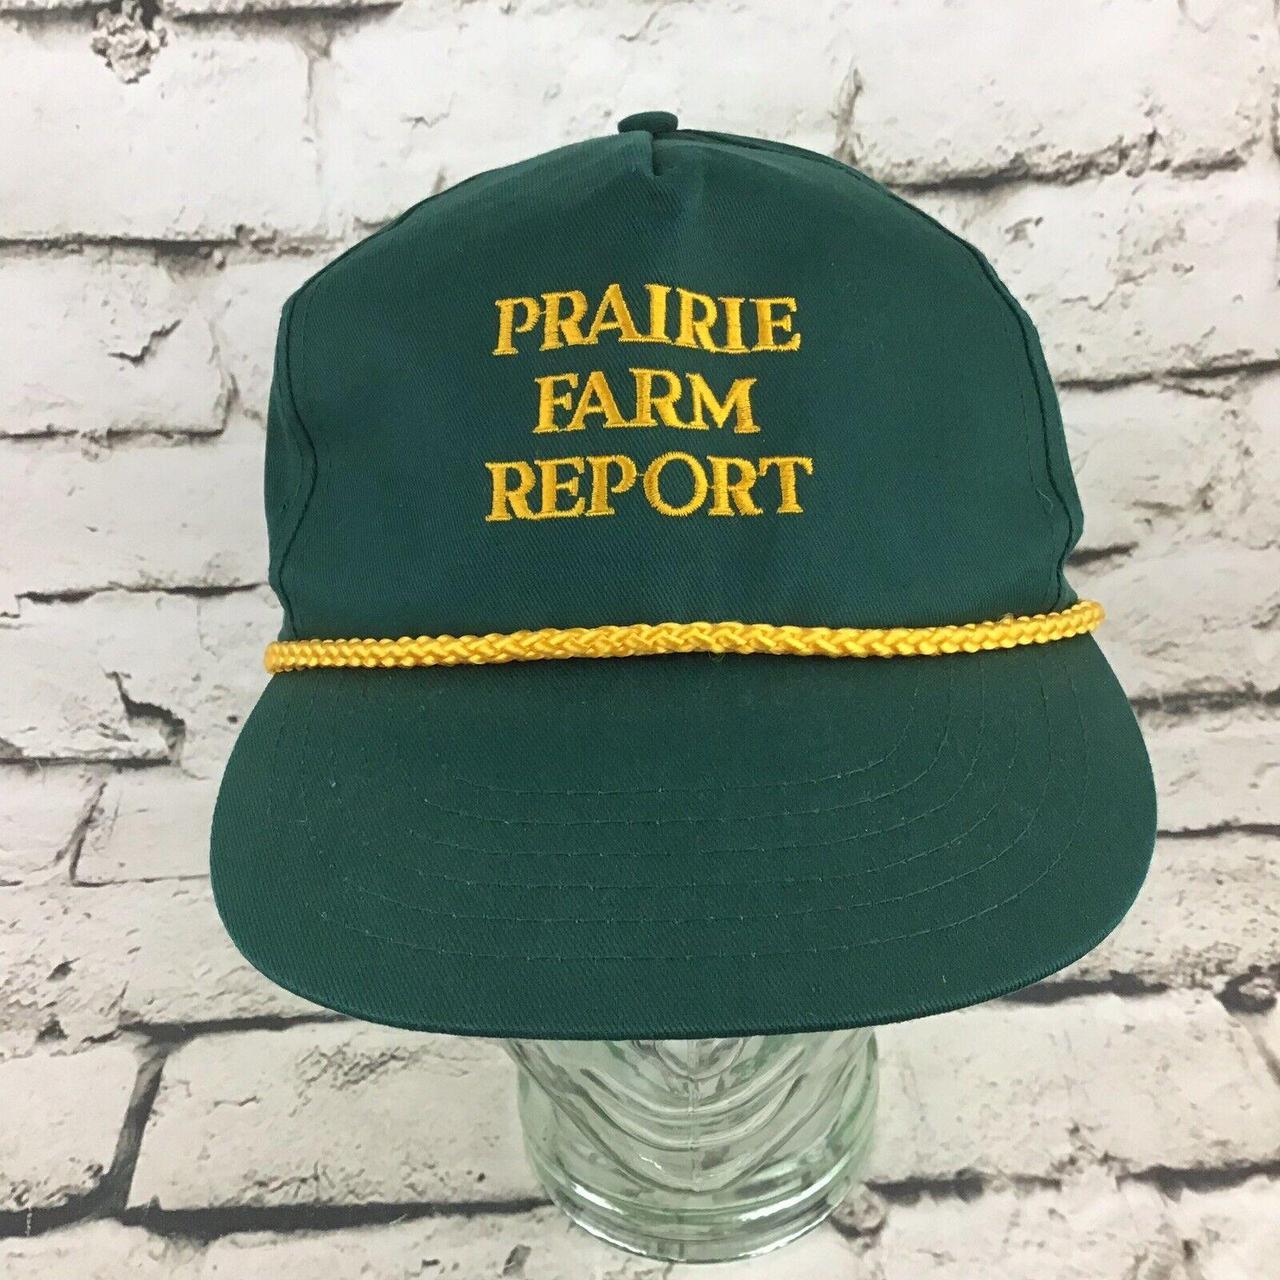 La Prairie Men's Green and Yellow Hat